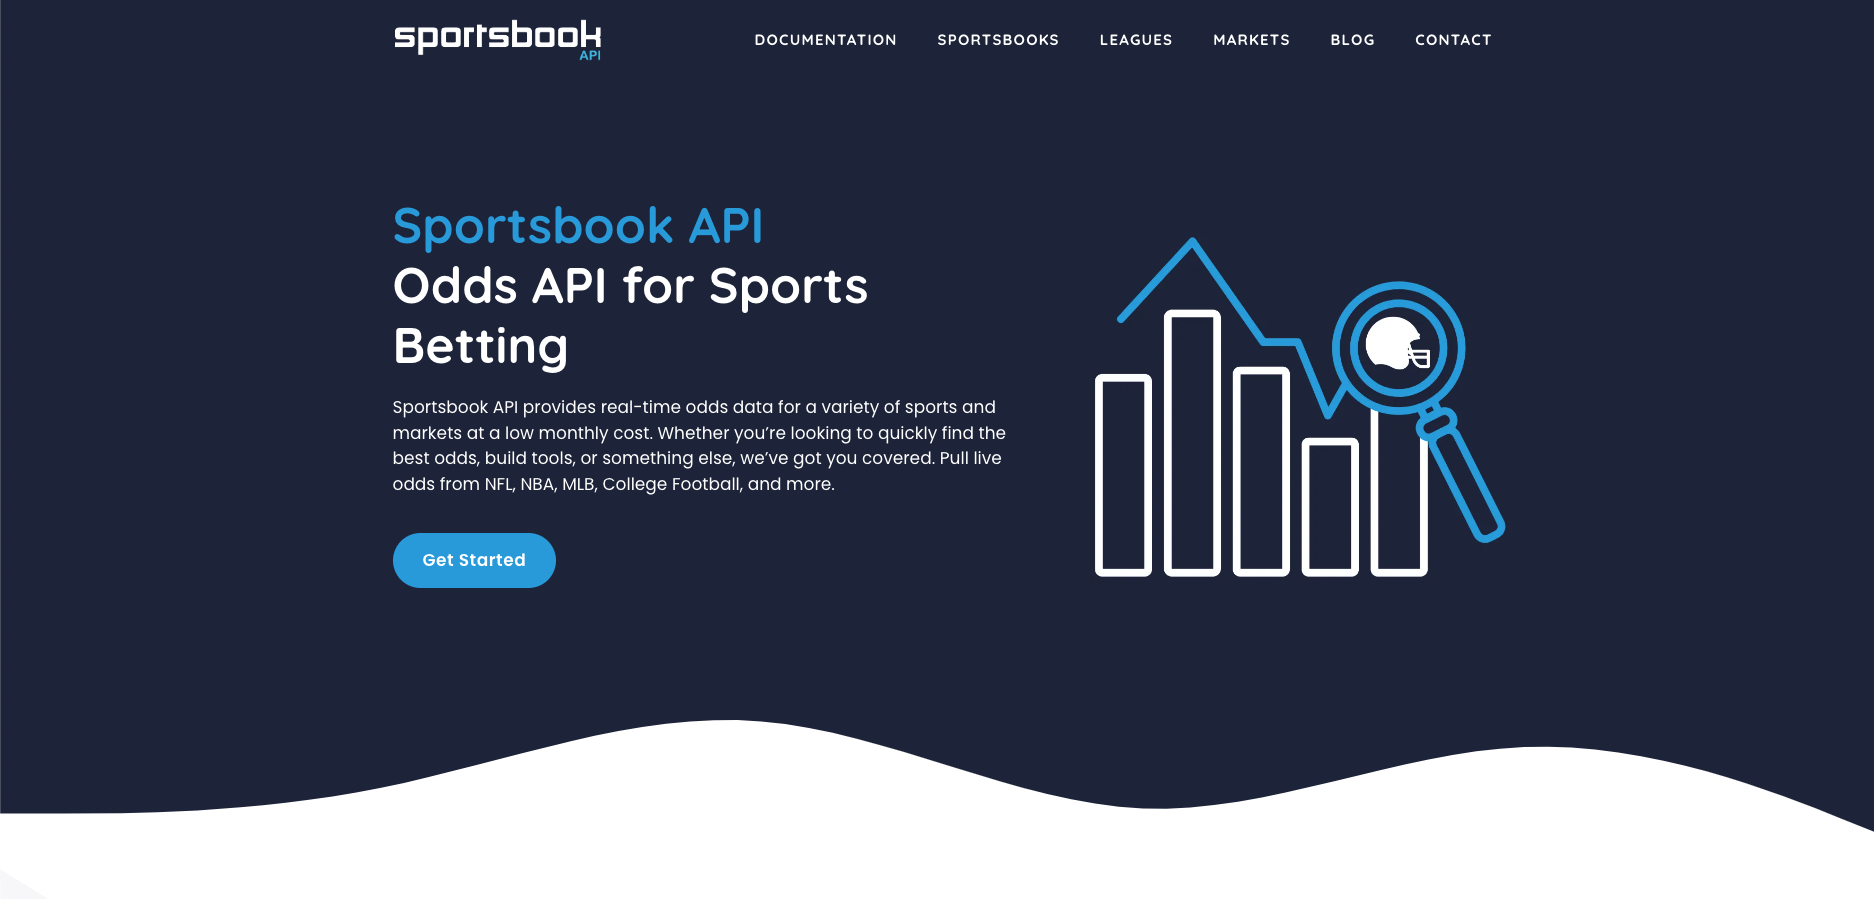 Sportsbook API Image